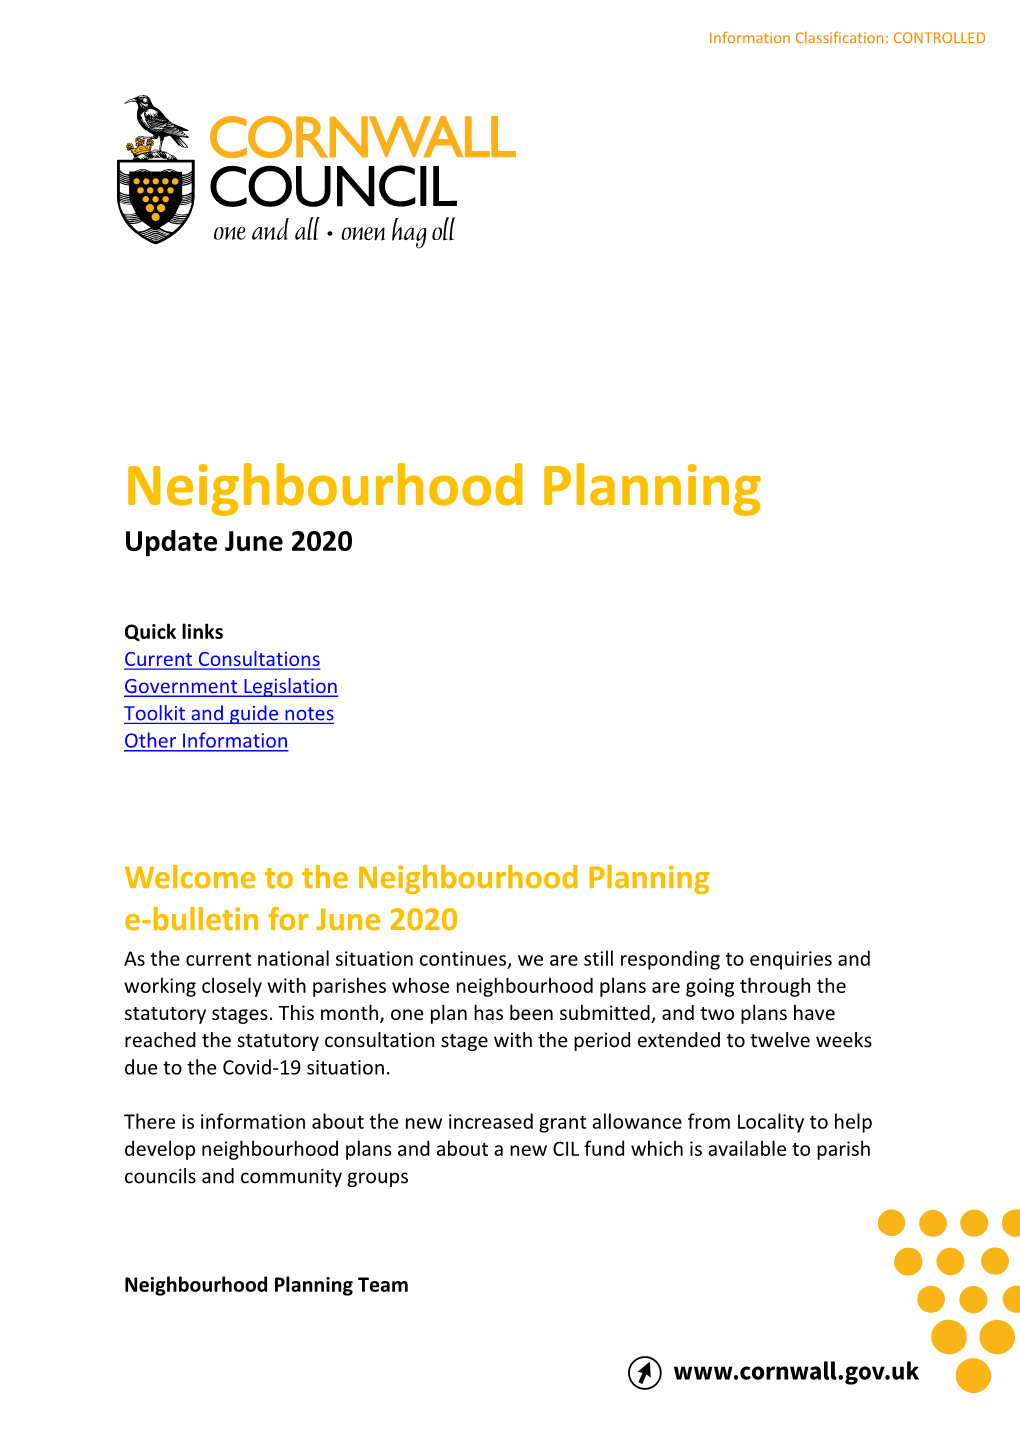 Neighbourhood Planning – June 2020